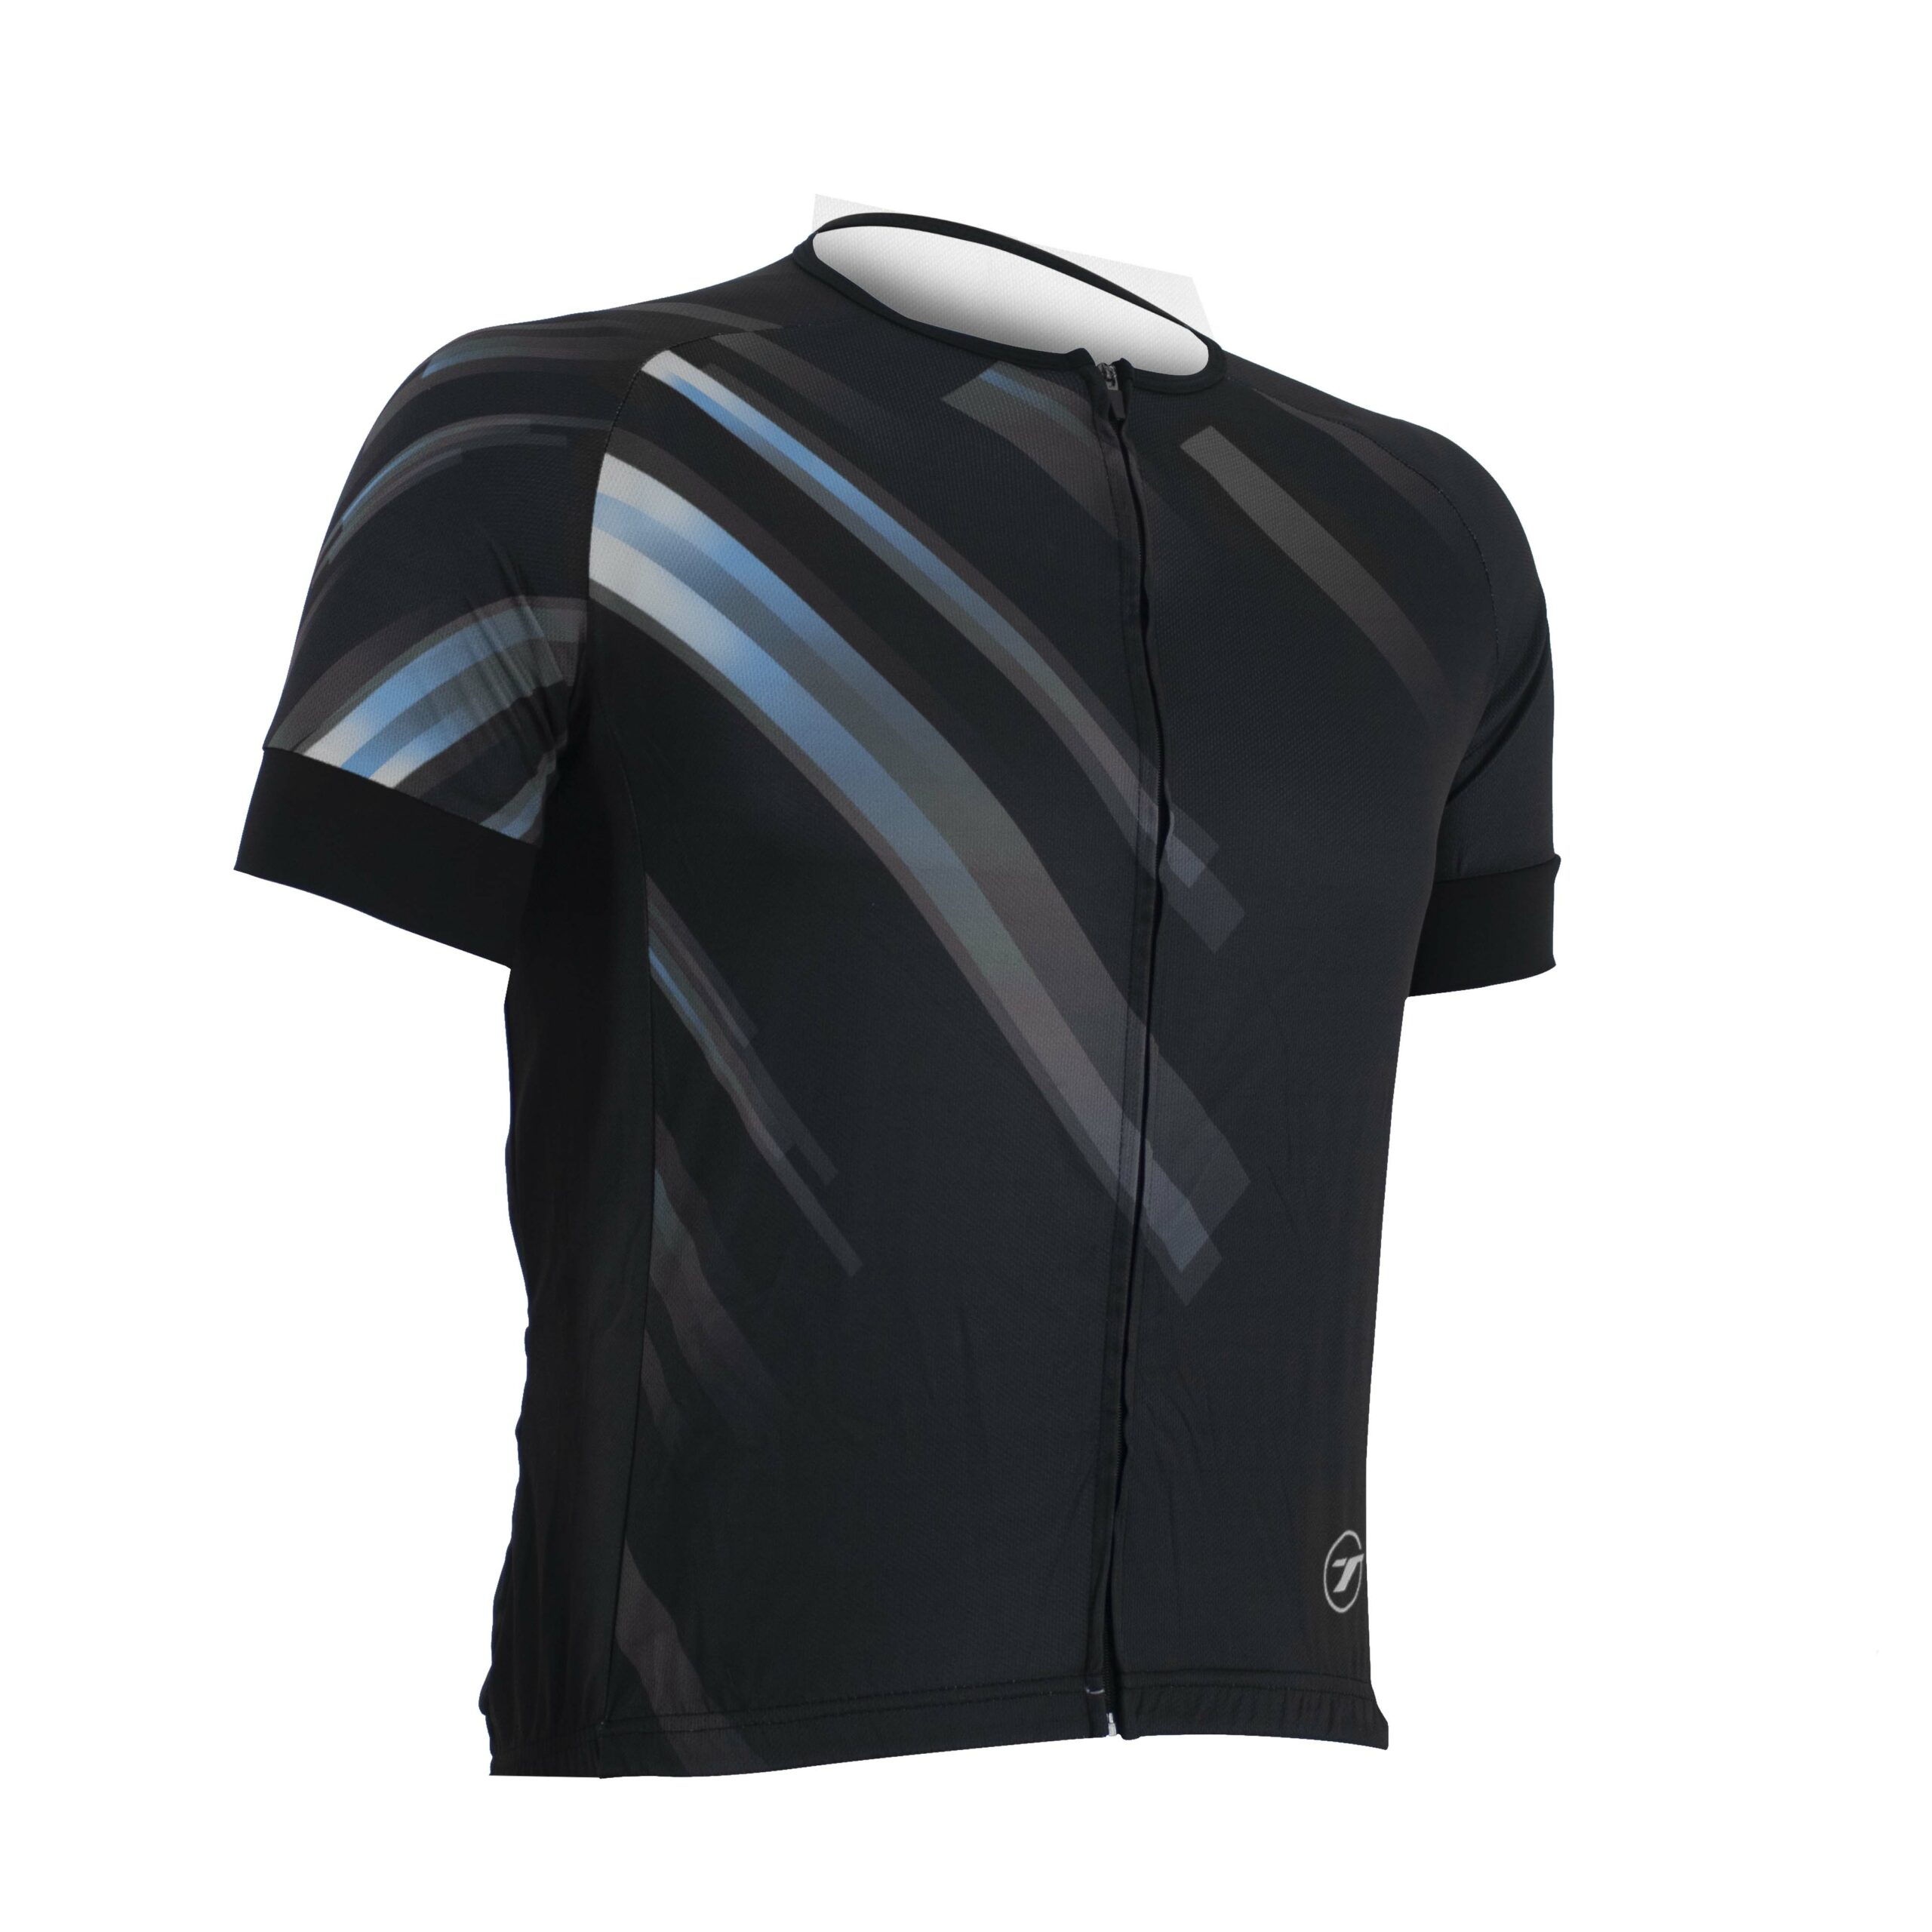 Camisa para ciclismo SUNNY | RIDE LINE - Preto/Cinza, GG